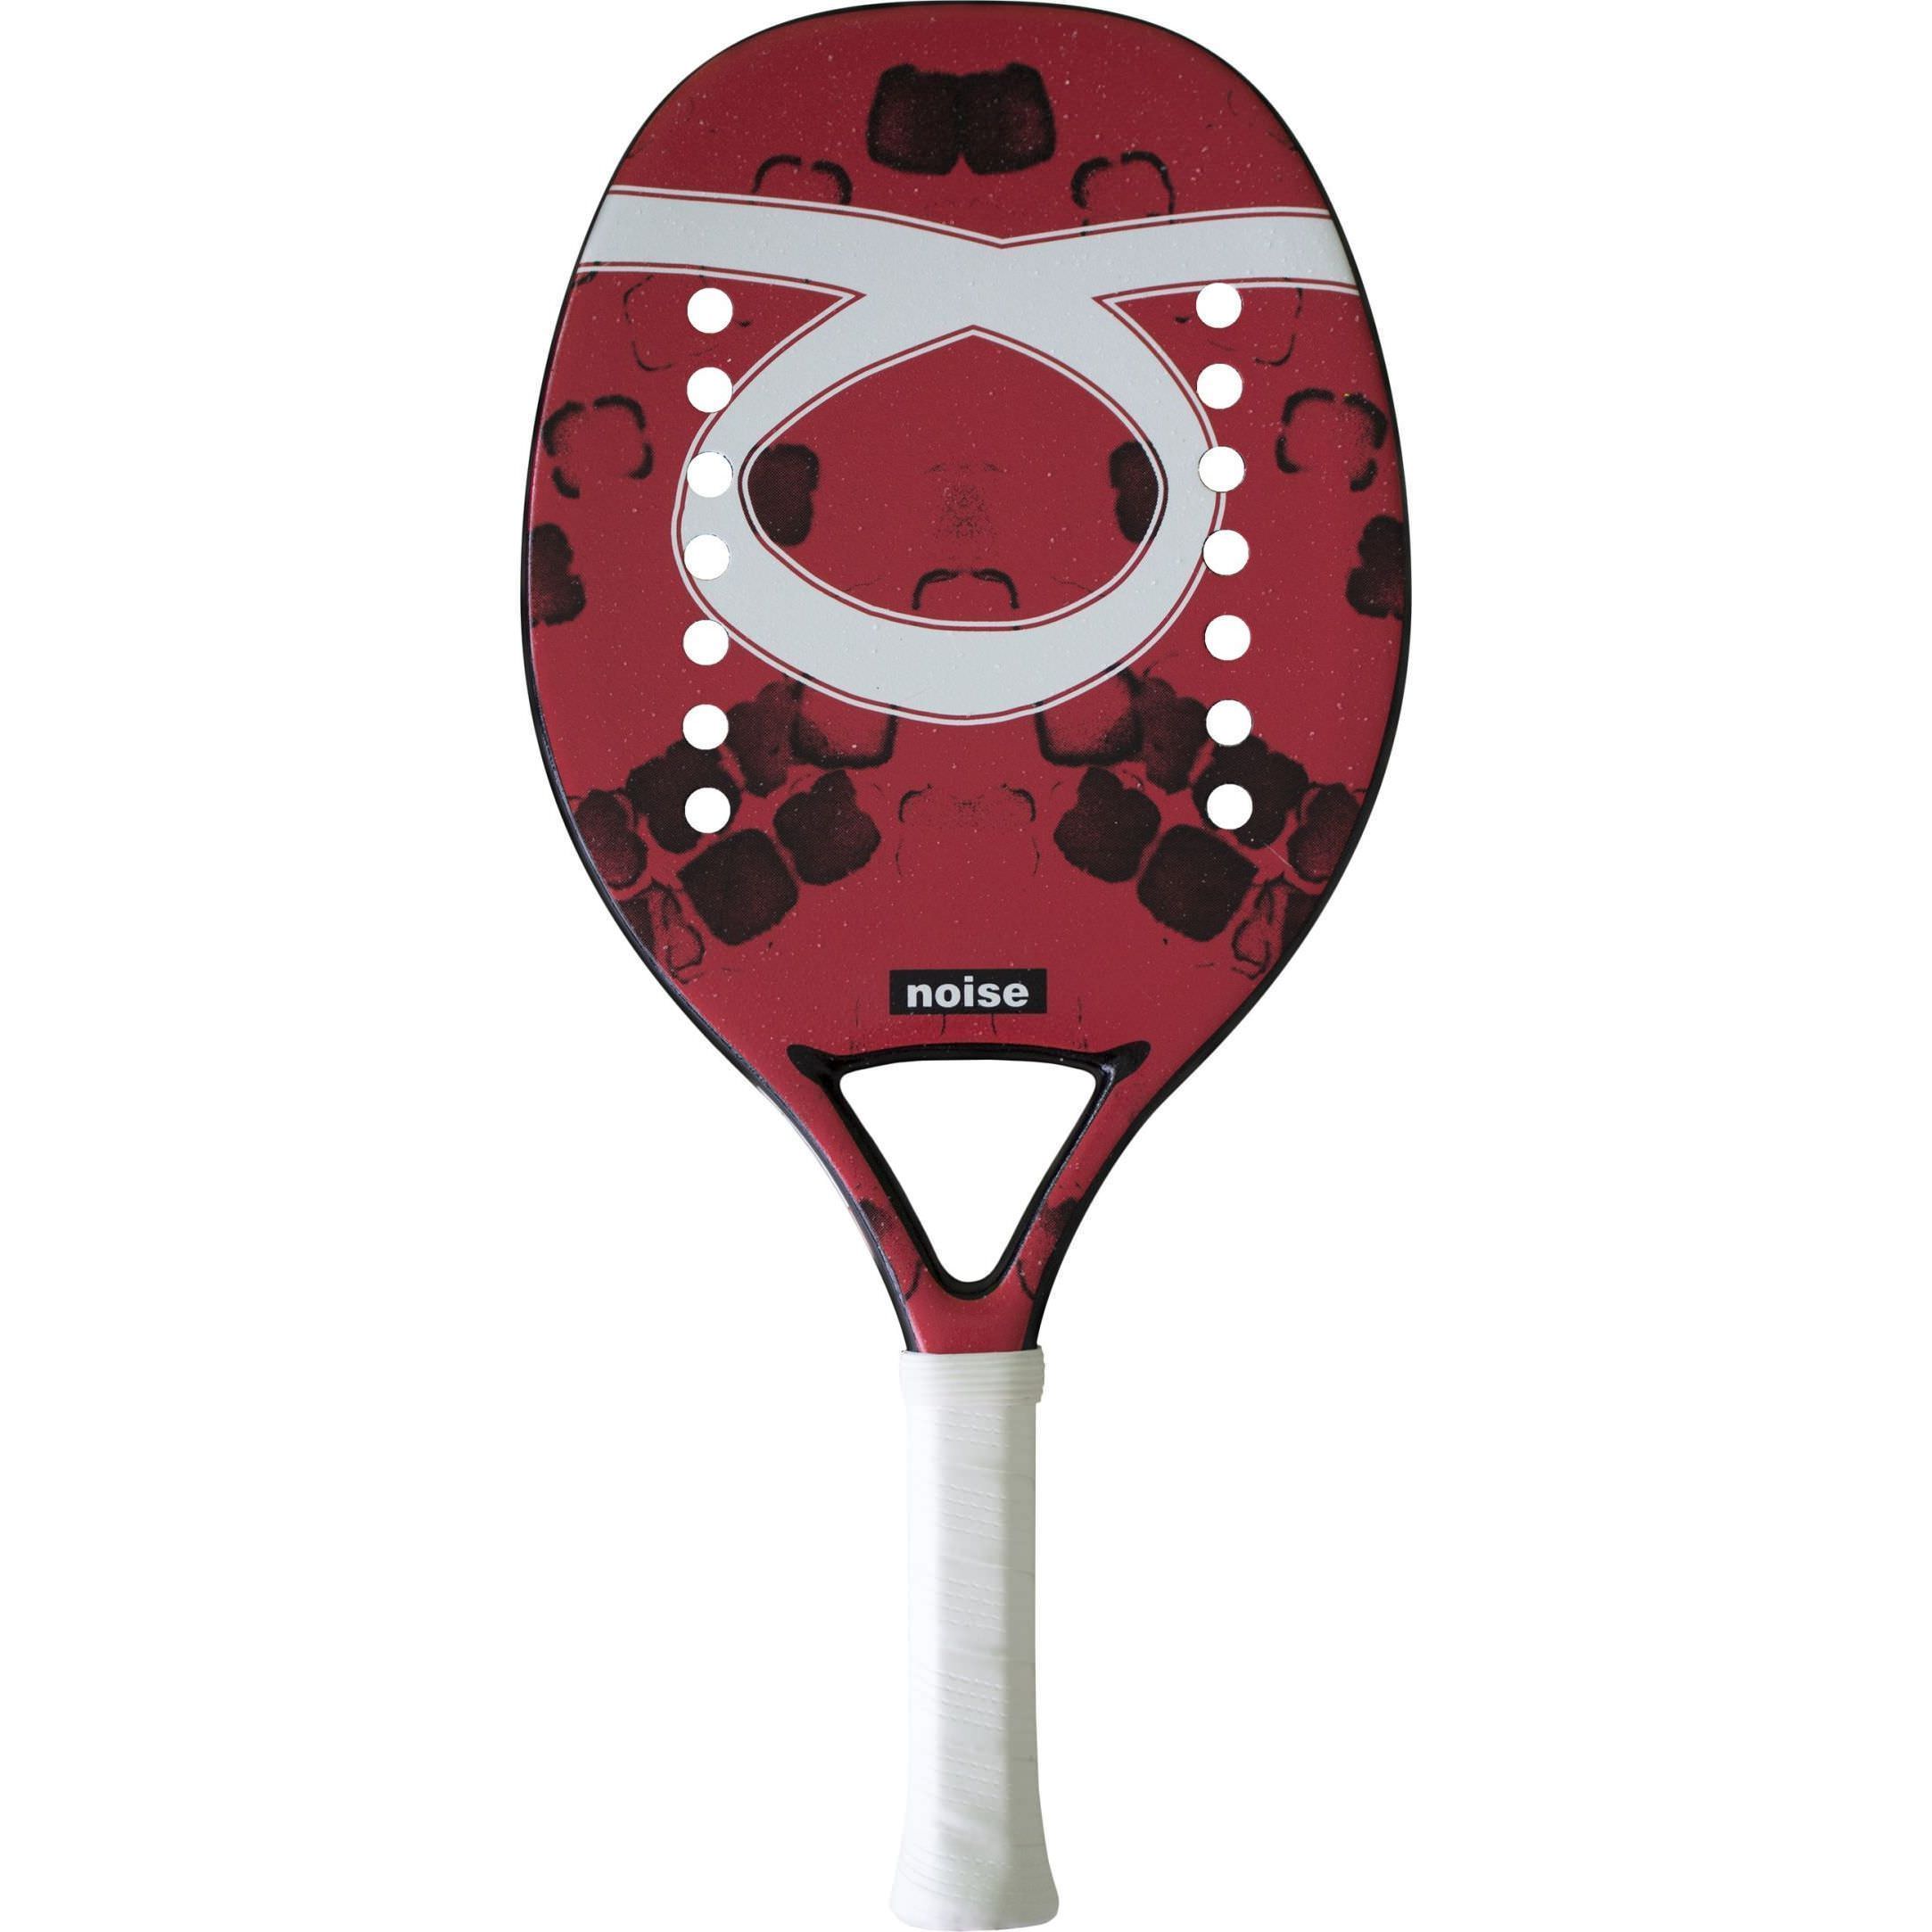 Noise red beach tennis racket